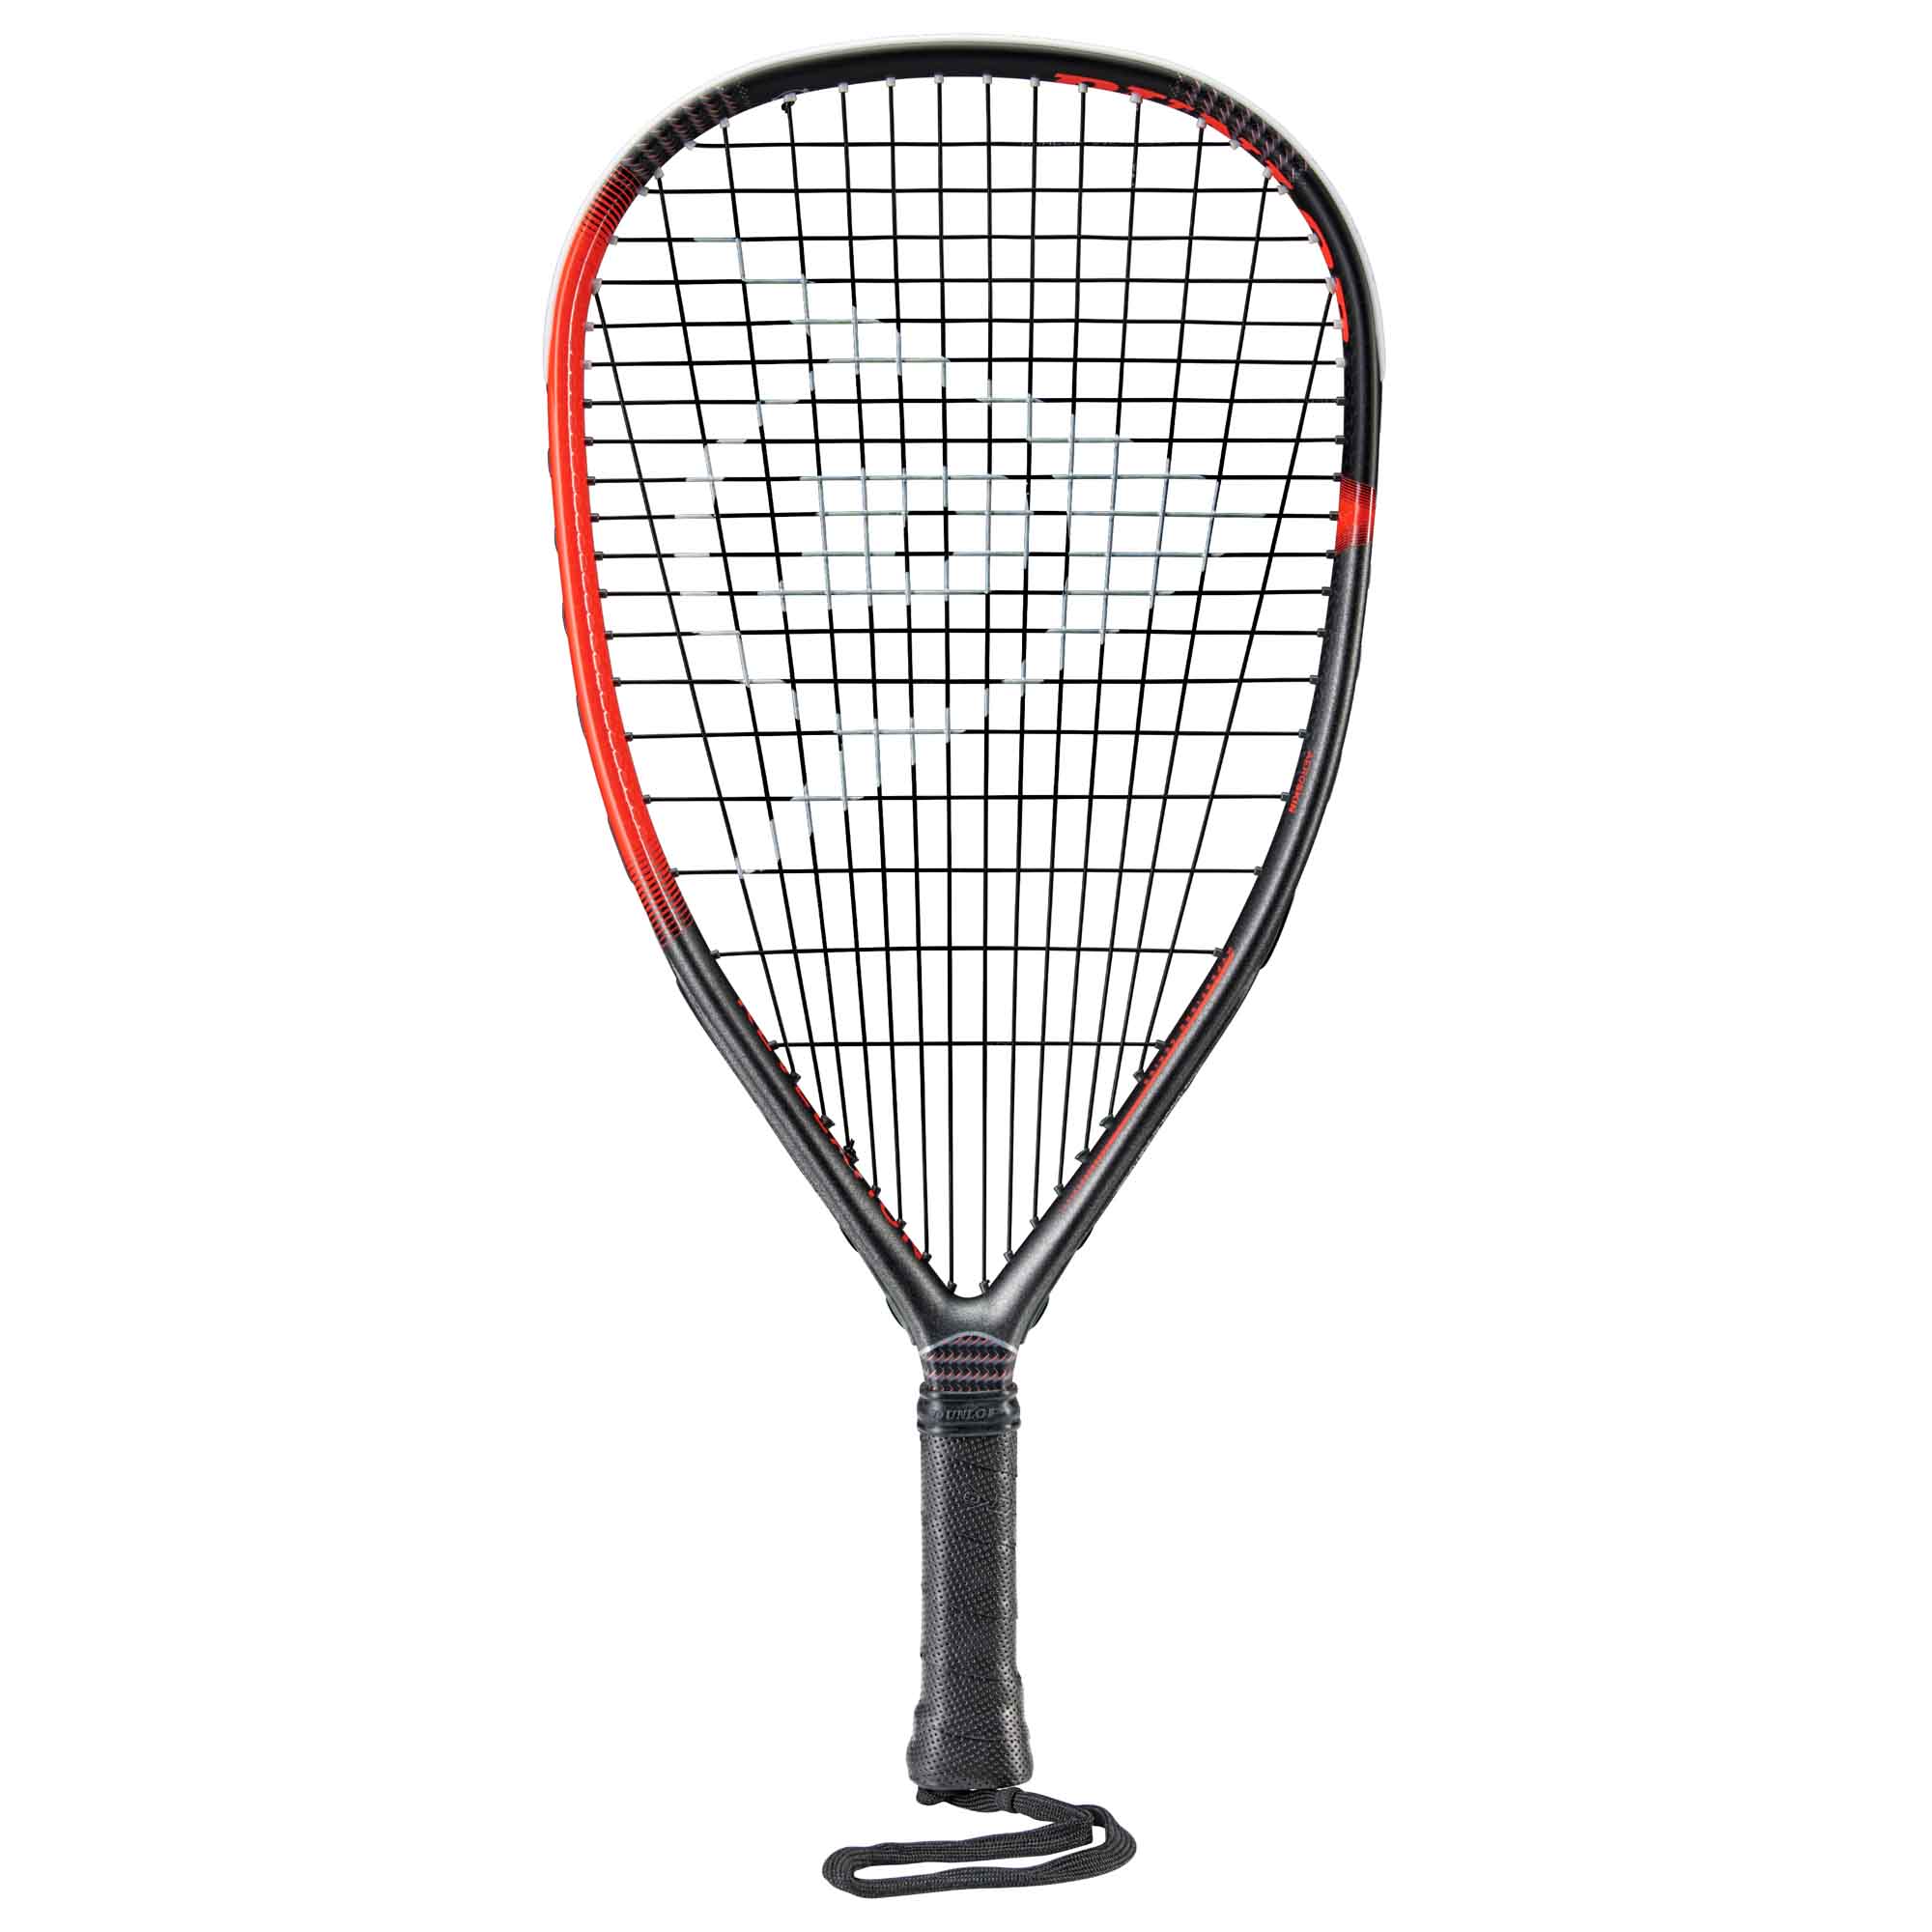 Dunlop Hyperfibre Revelation Racketball Racket